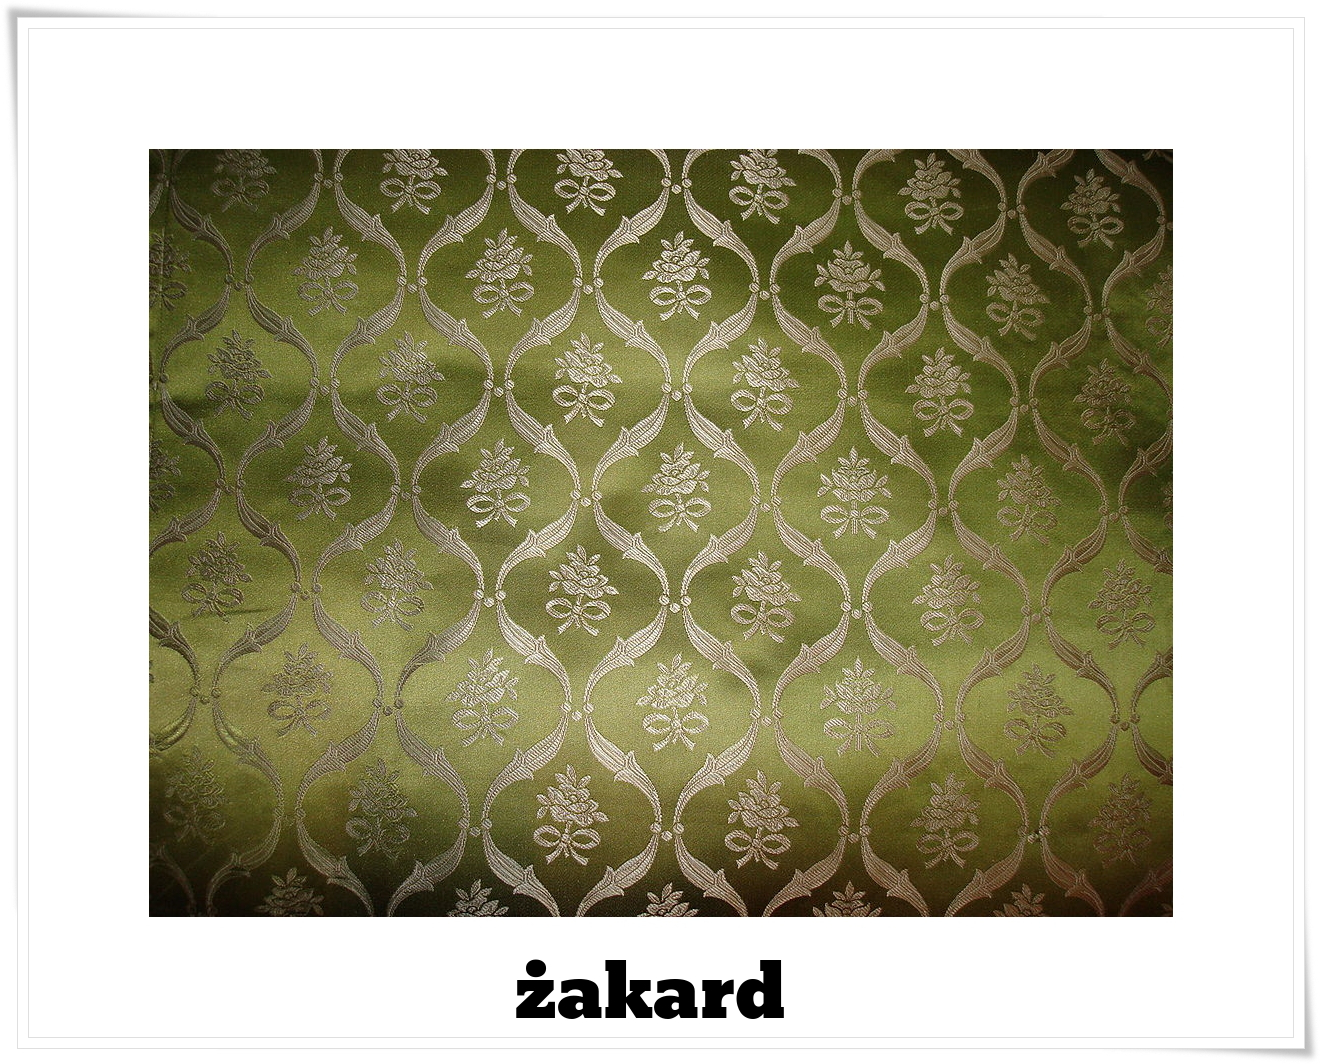 żakard - Szwedzka tapicerka jedwabna fot Kerstin Wölling